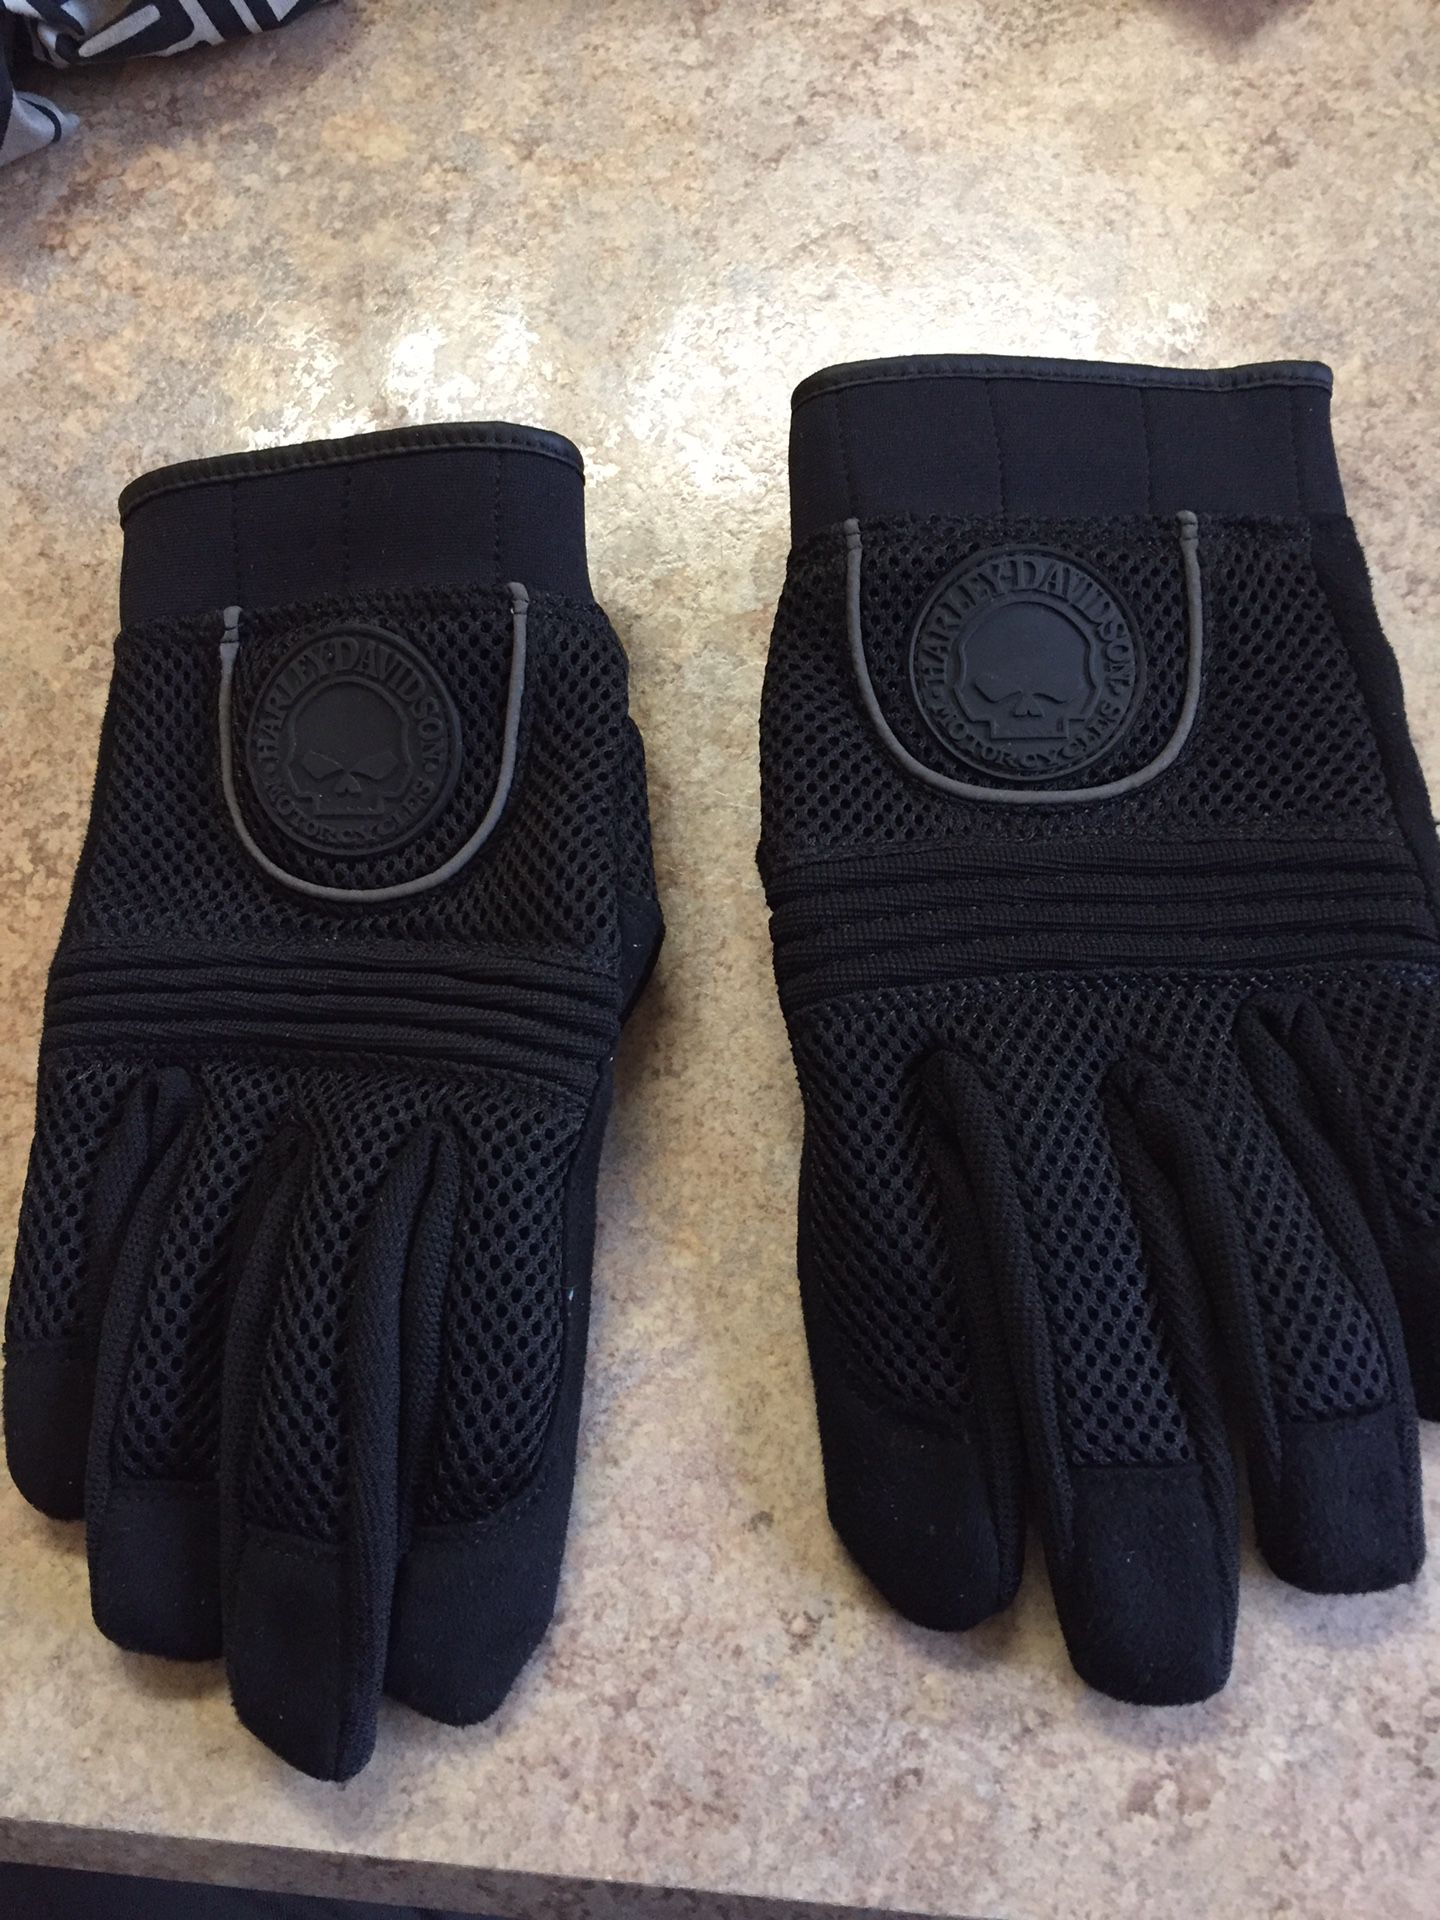 Harley Davidson men’s XL gloves